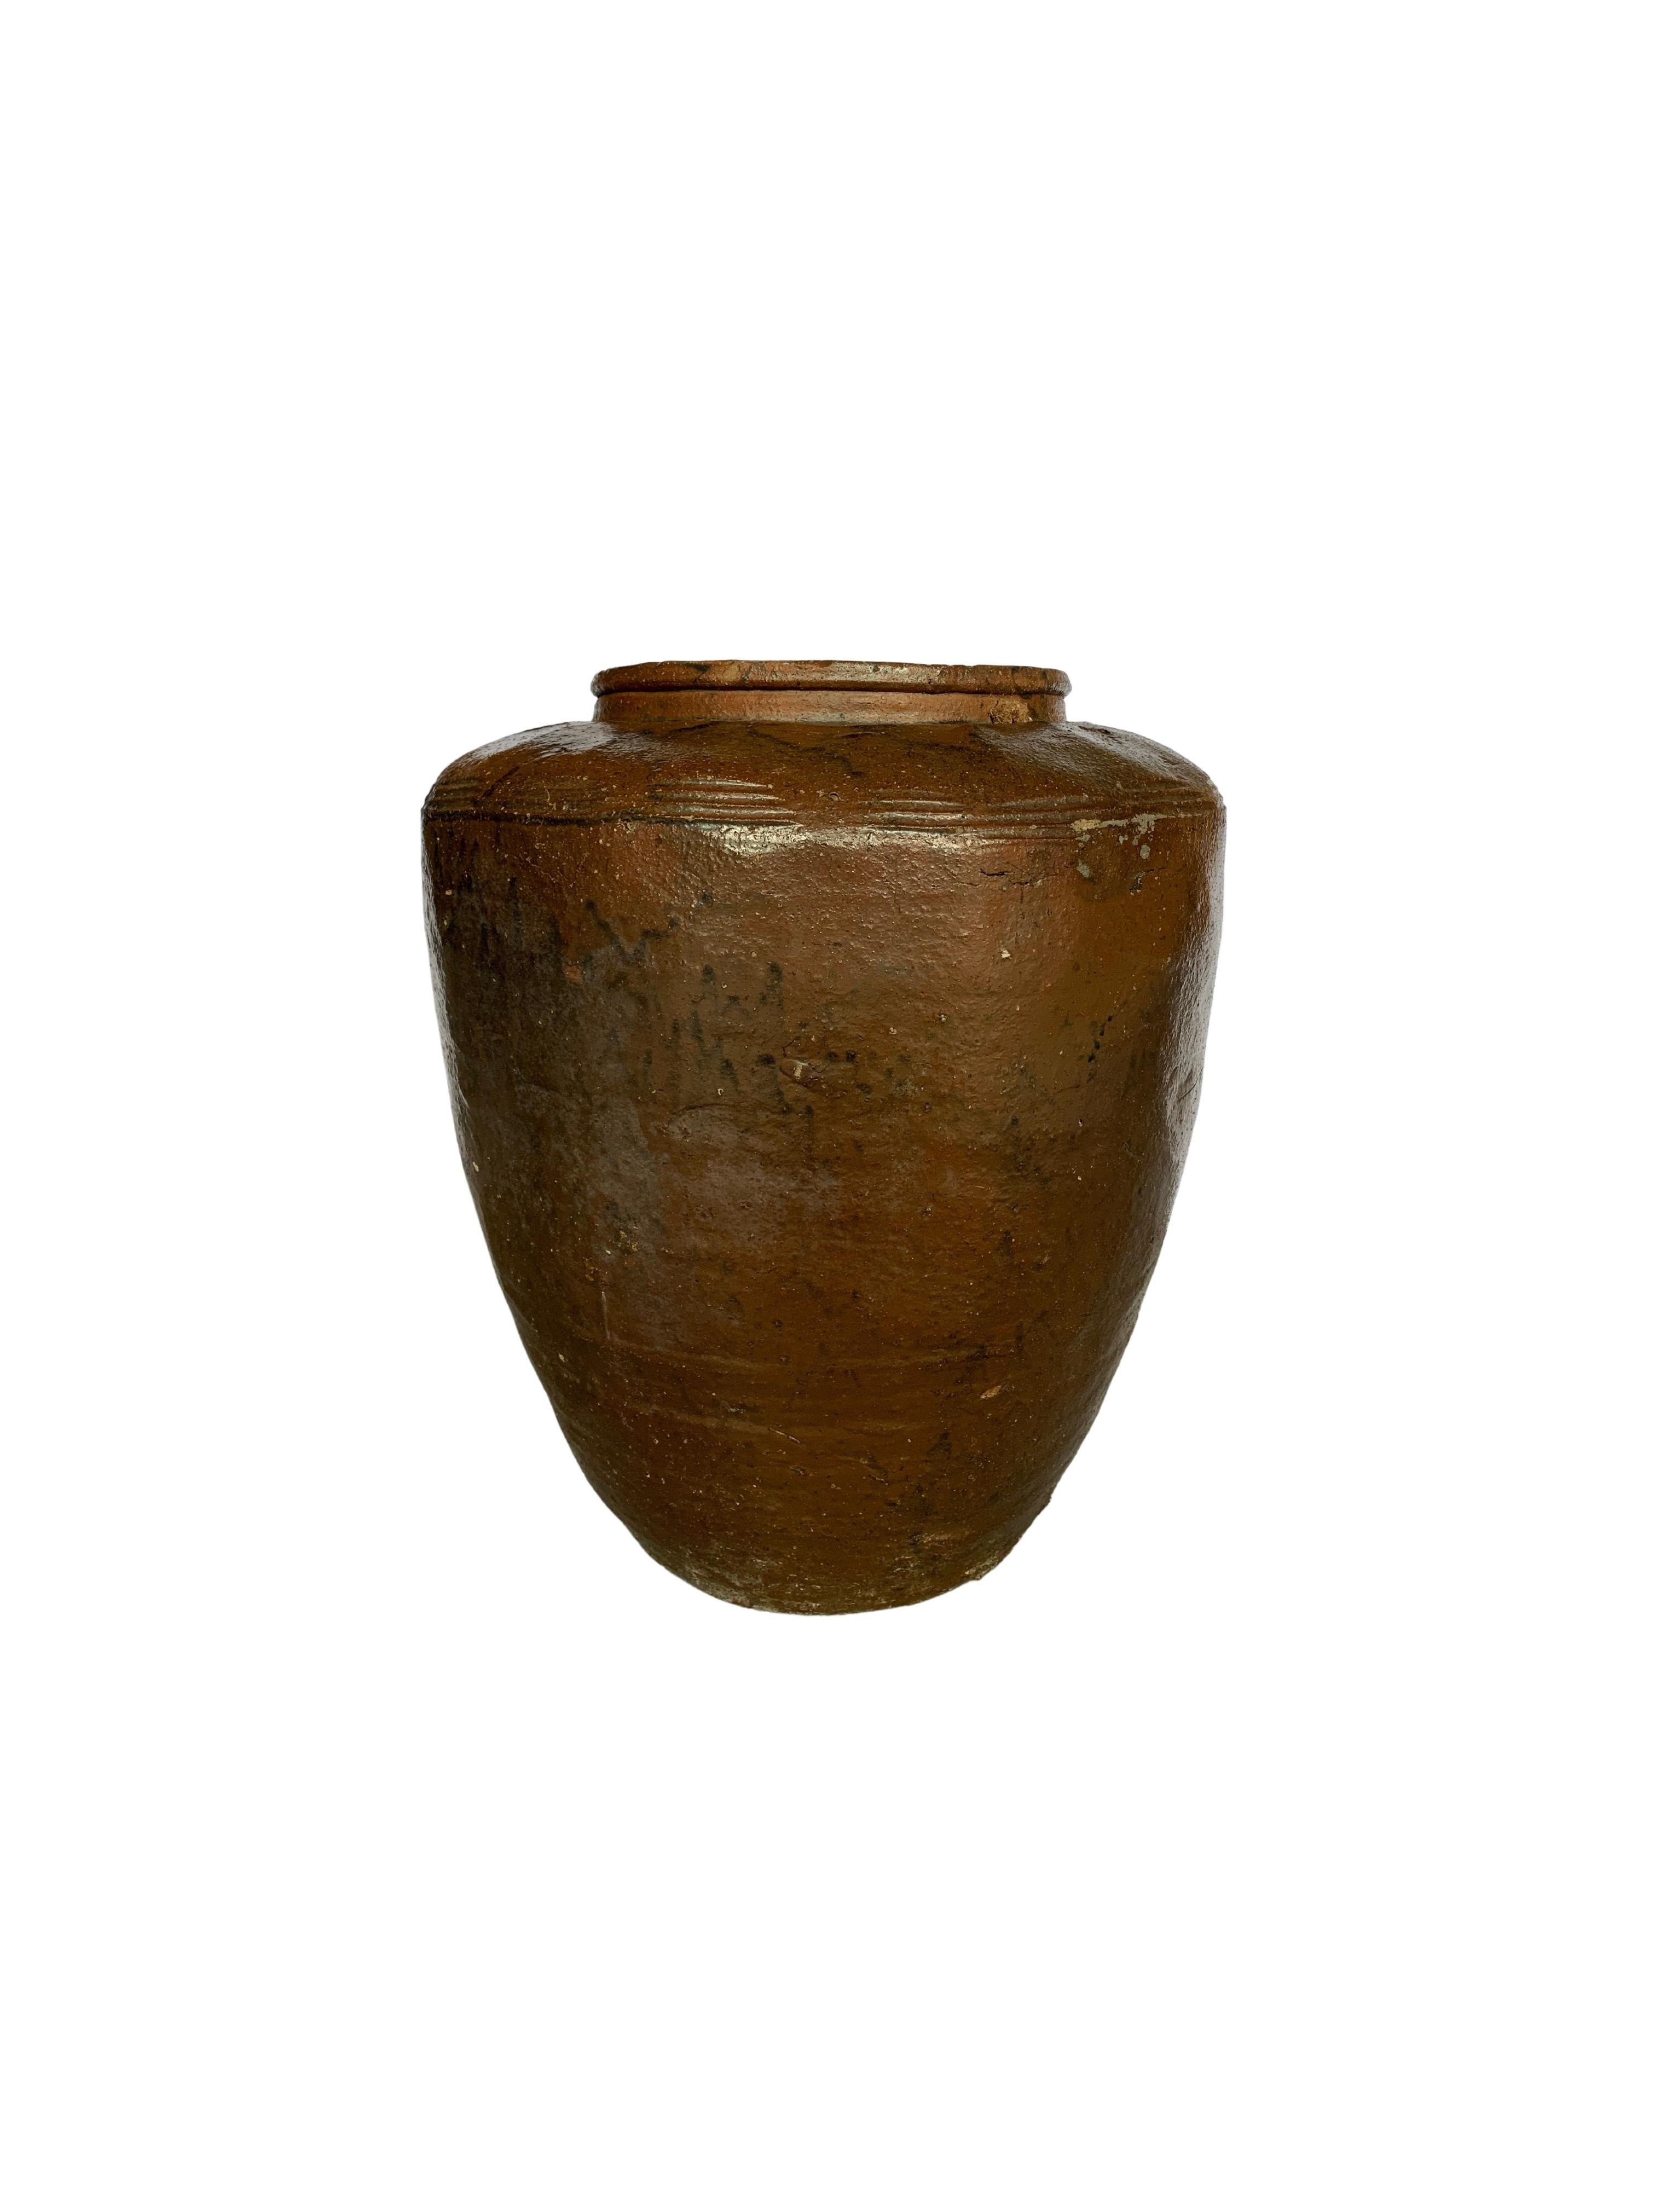 Qing Antique Chinese Brown & Black Glazed Ceramic Salty Egg Jar, c. 1900 For Sale